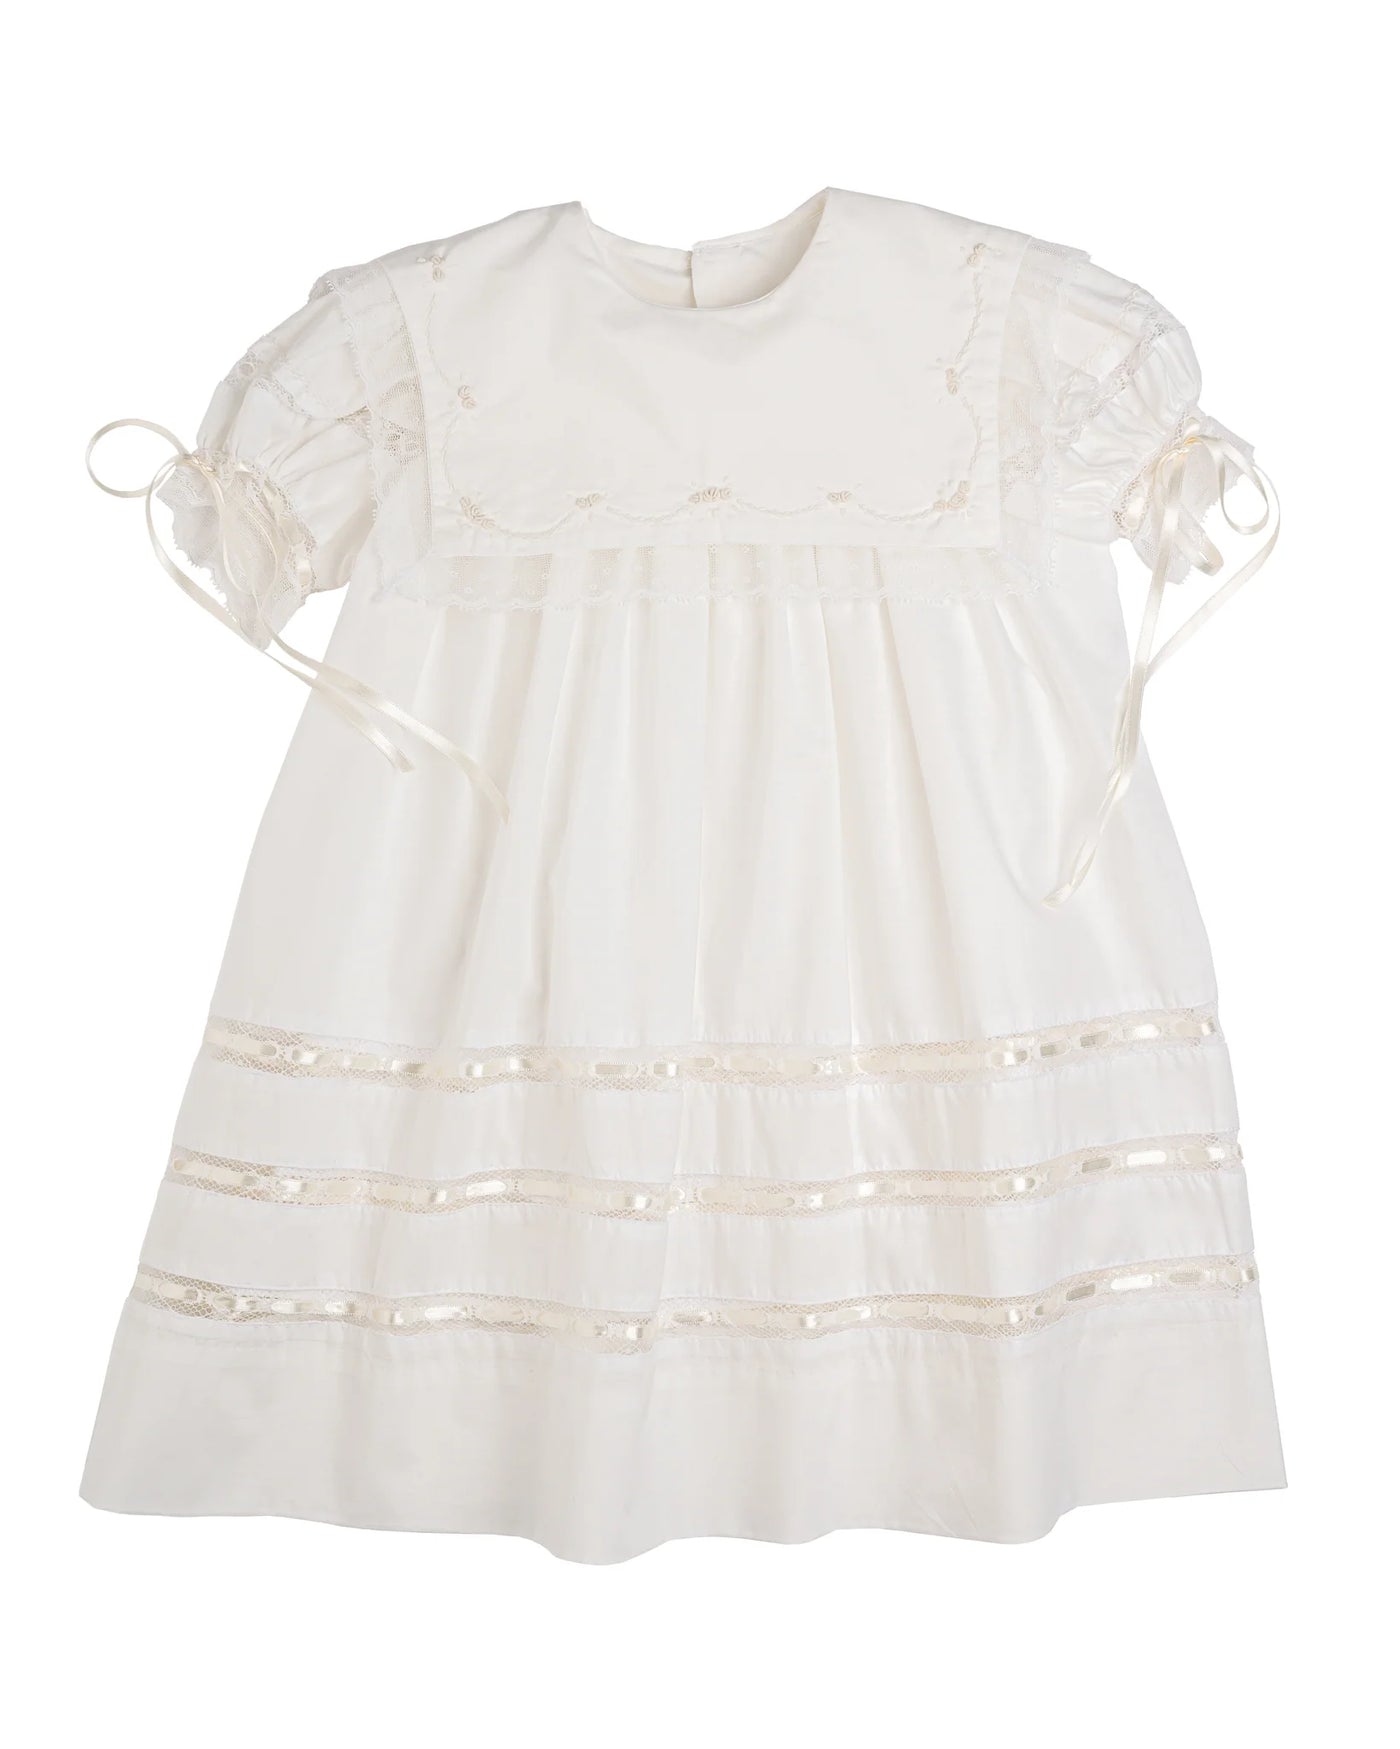 Elle A Dress - Blessings White Batiste - Ecru Embroidery